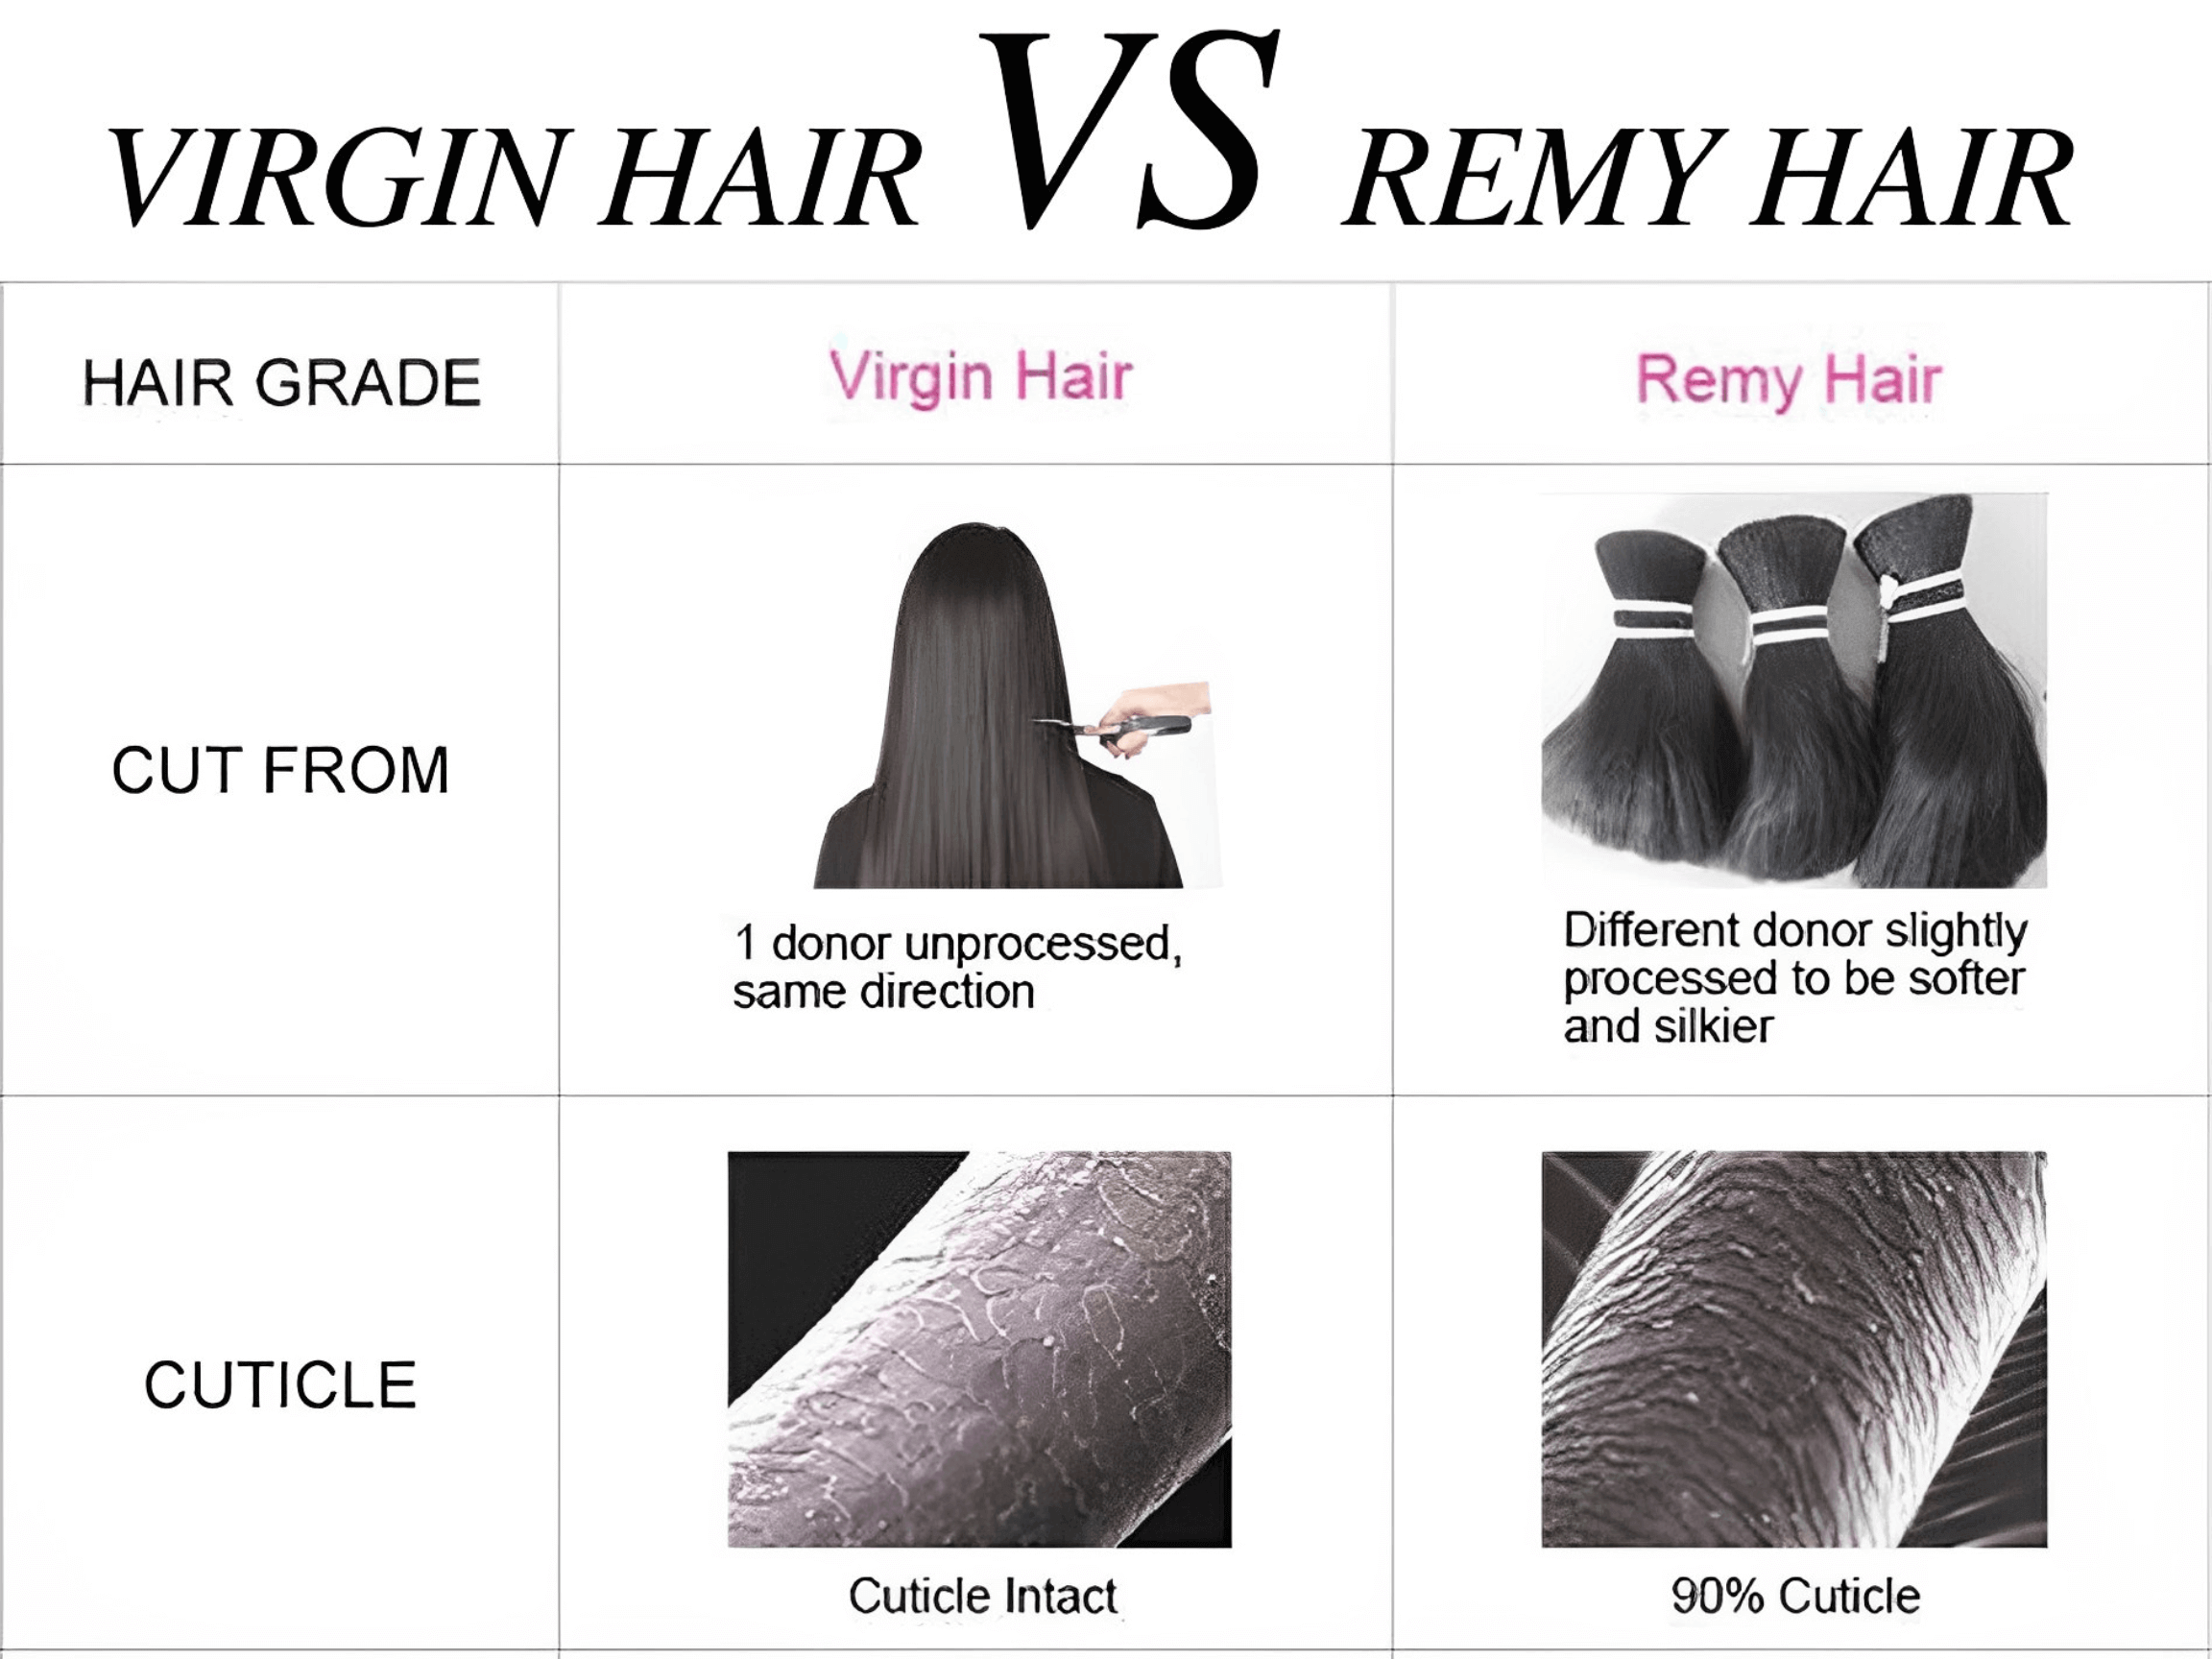 Virgin hair VS Remy hair 